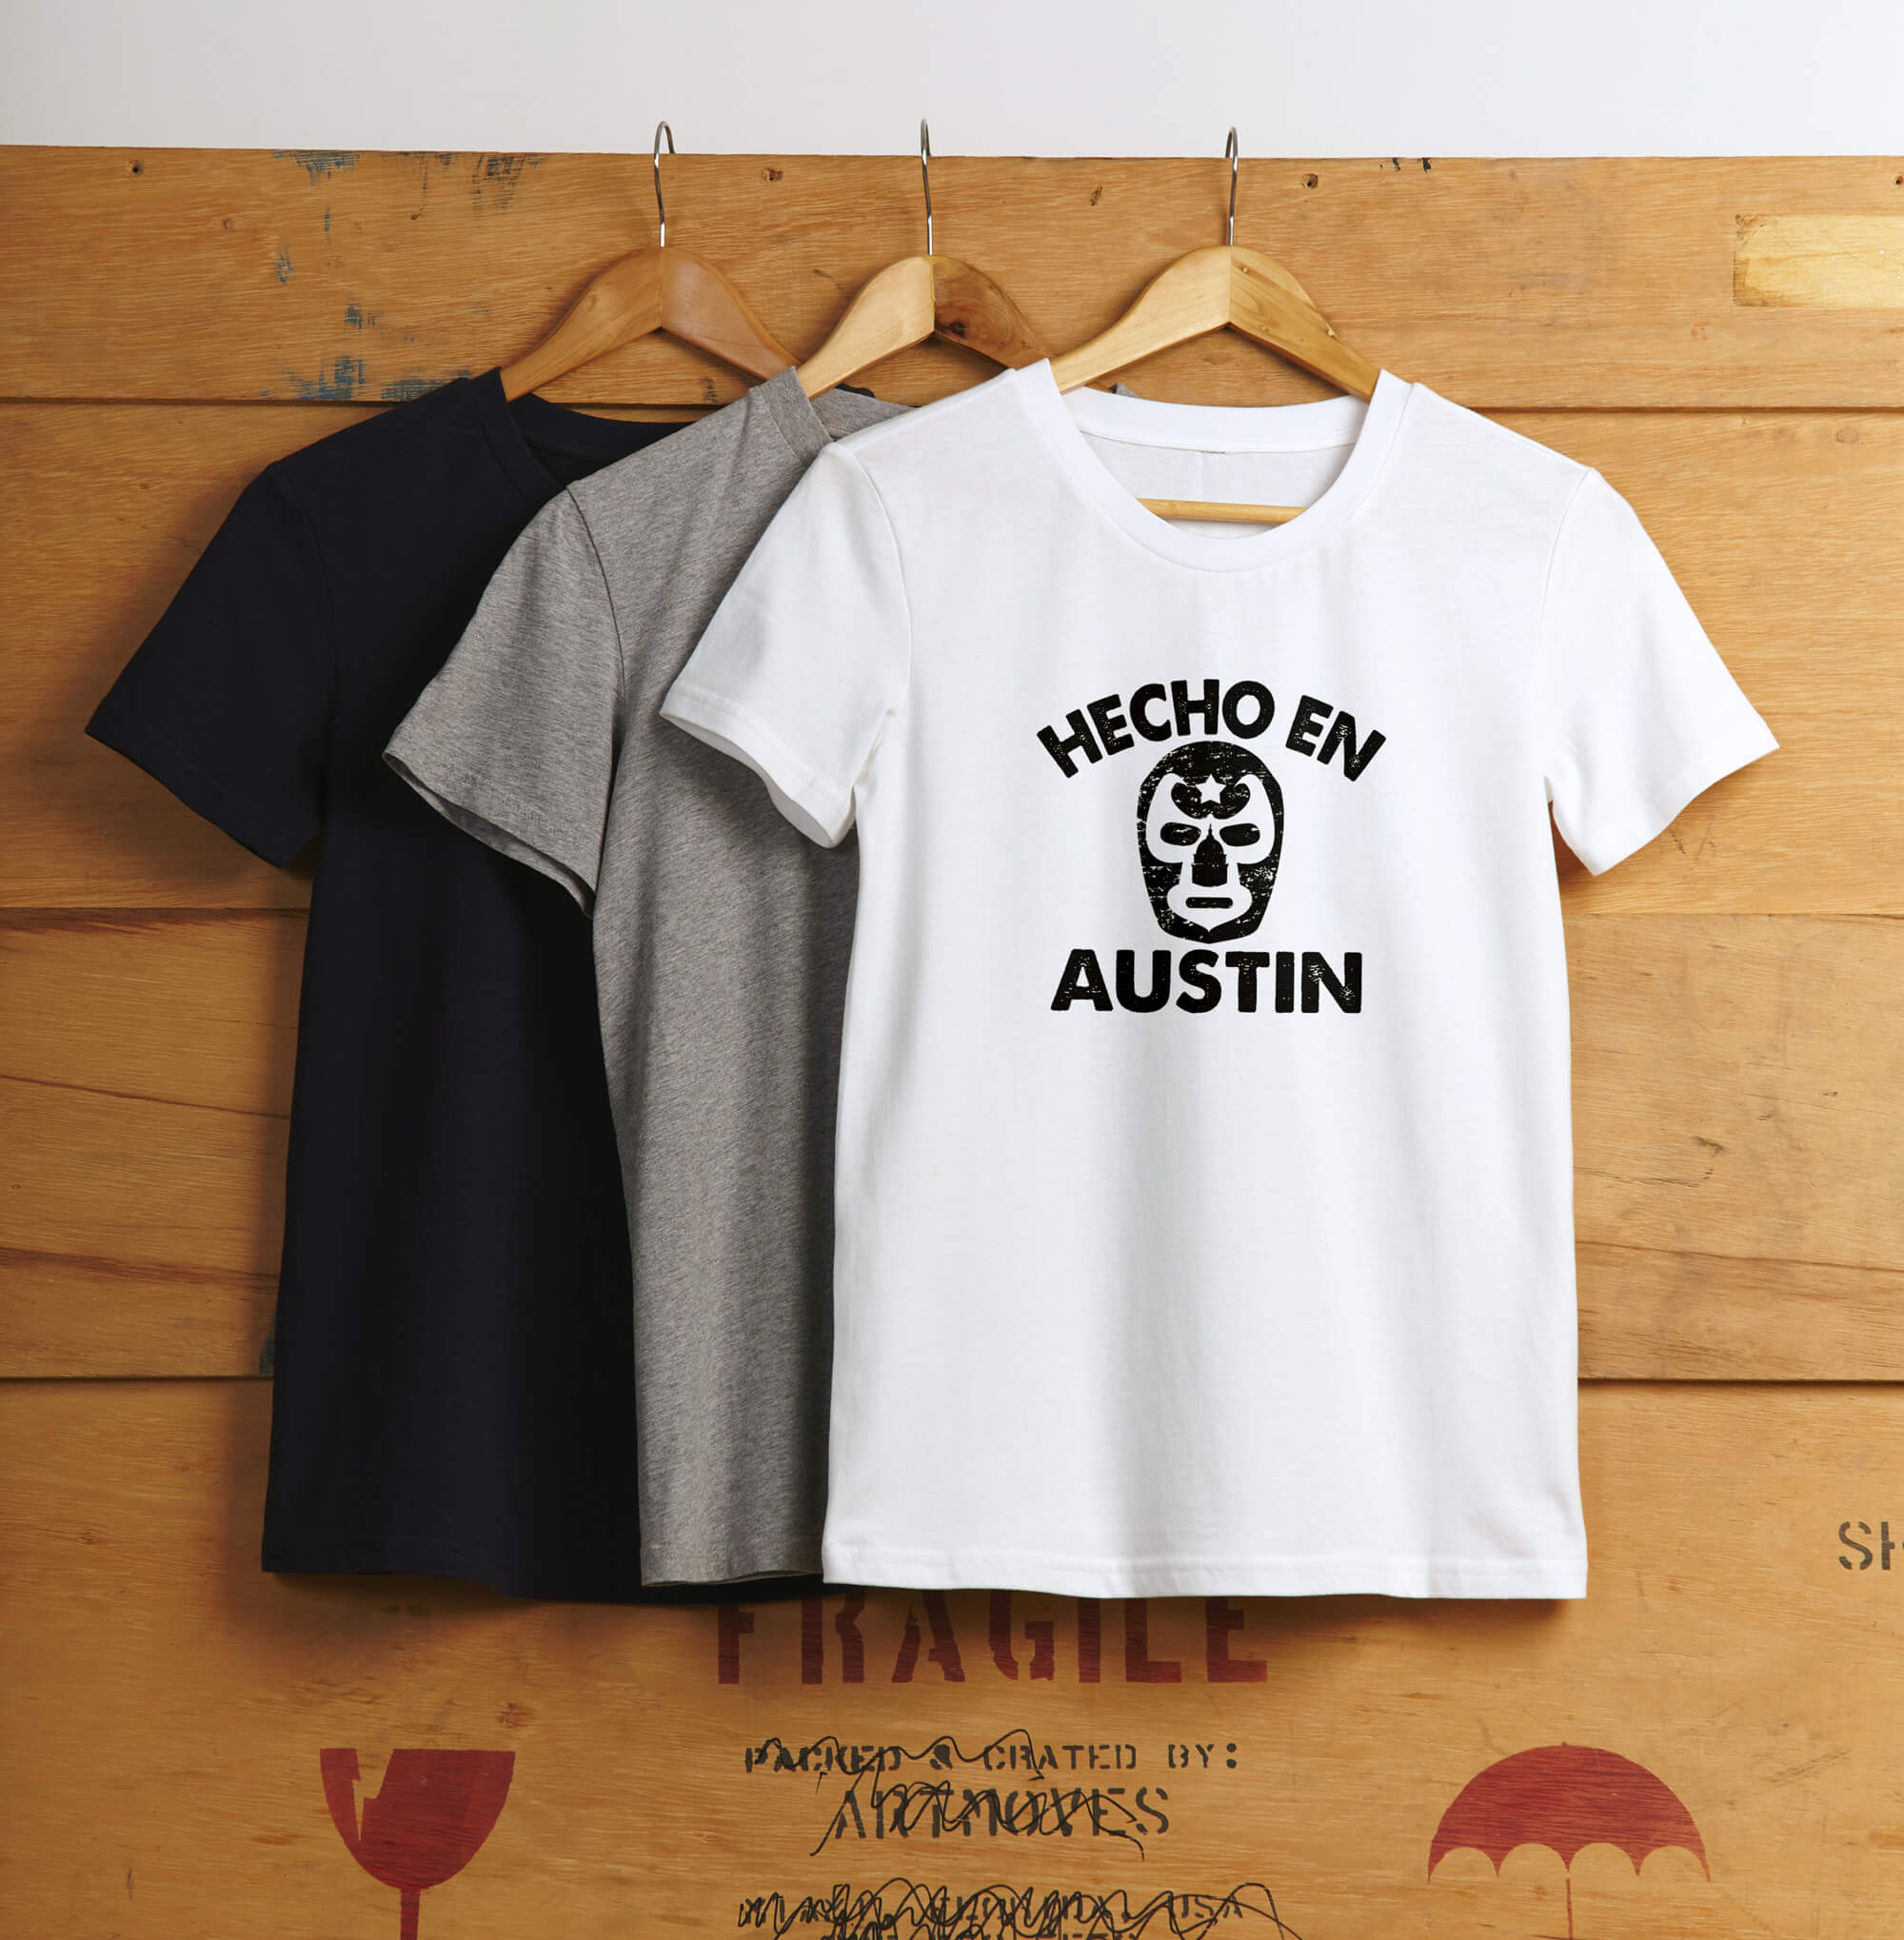 Custom Printed T-Shirts: Simple, Yet Effective Marketing ...